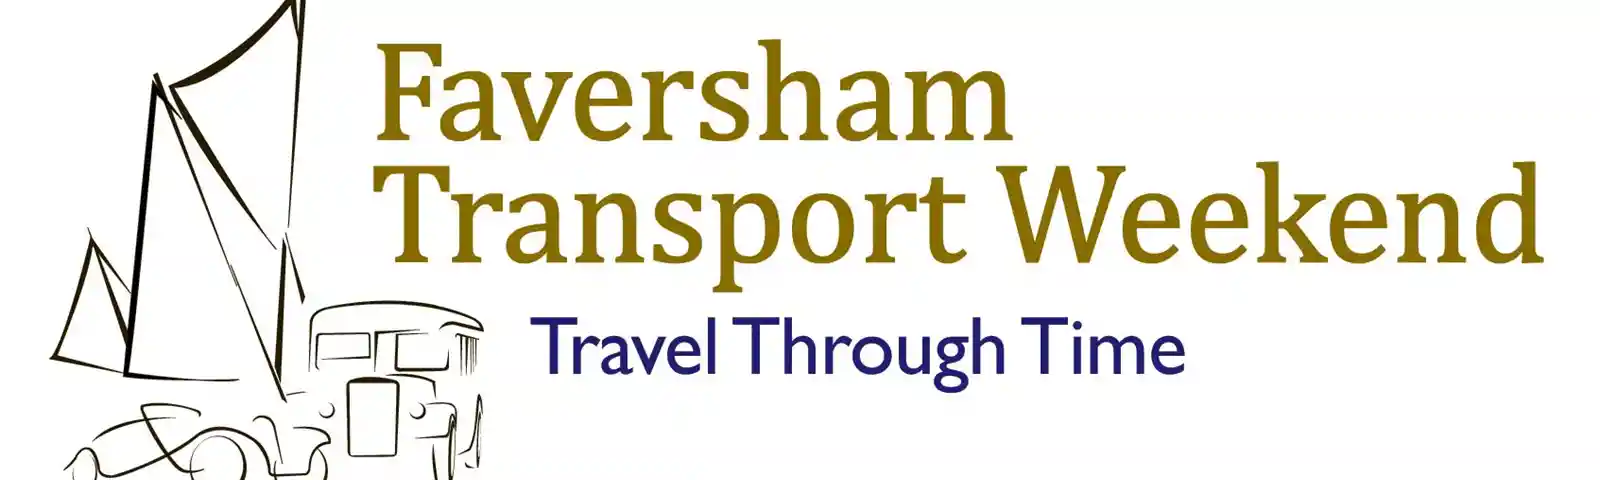 Faversham Transport Weekend 2018 Banner.jpg